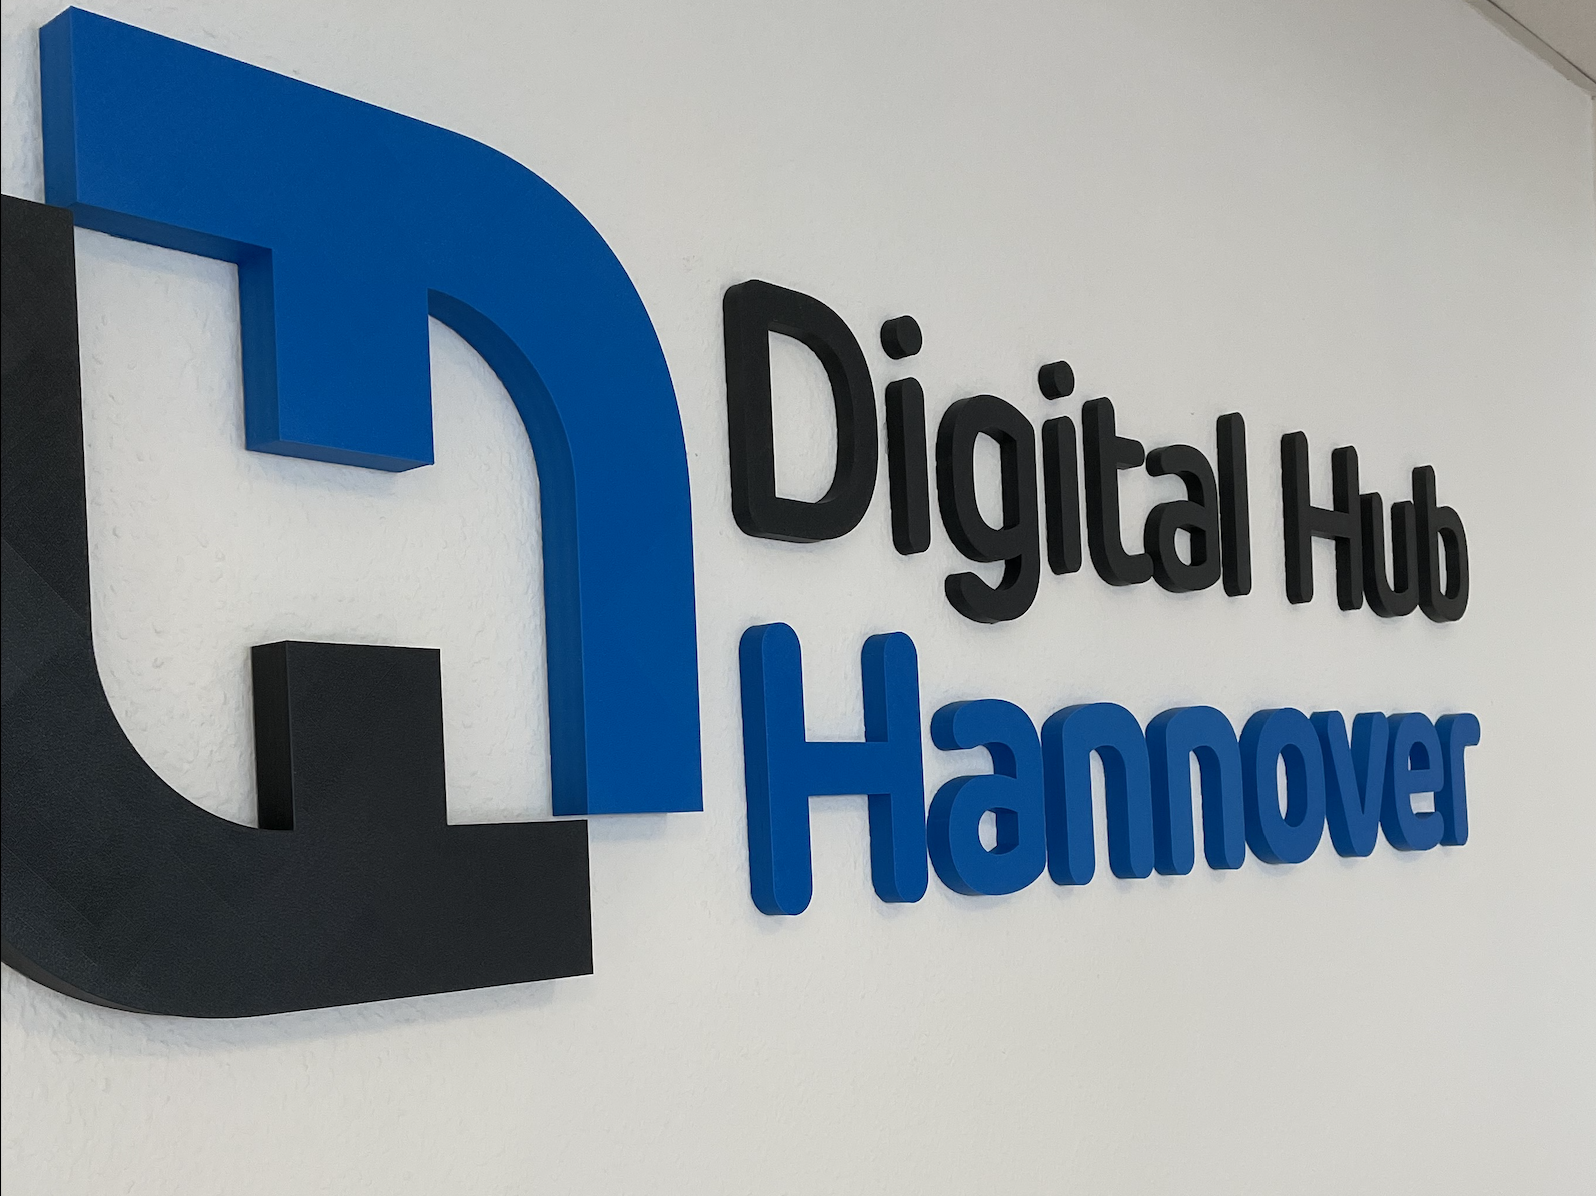 digitalhub_logo_office.png – Digital Hub Hannover GmbH